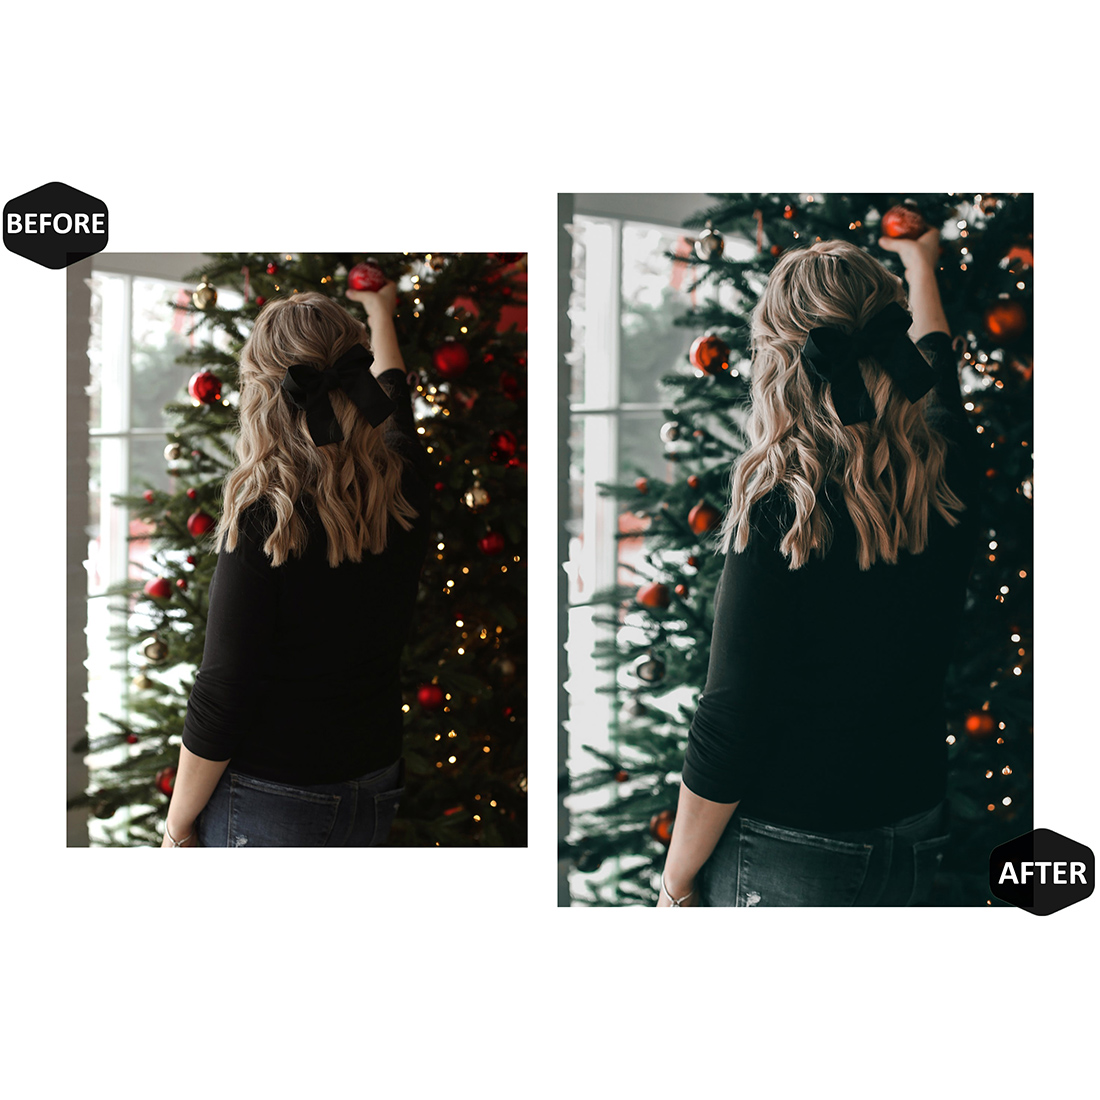 12 Indoor Xmas Lightroom Presets, Holiday Mobile Preset, Moody Christmas Desktop LR Filter Scheme Lifestyle Theme For Portrait, Instagram preview image.